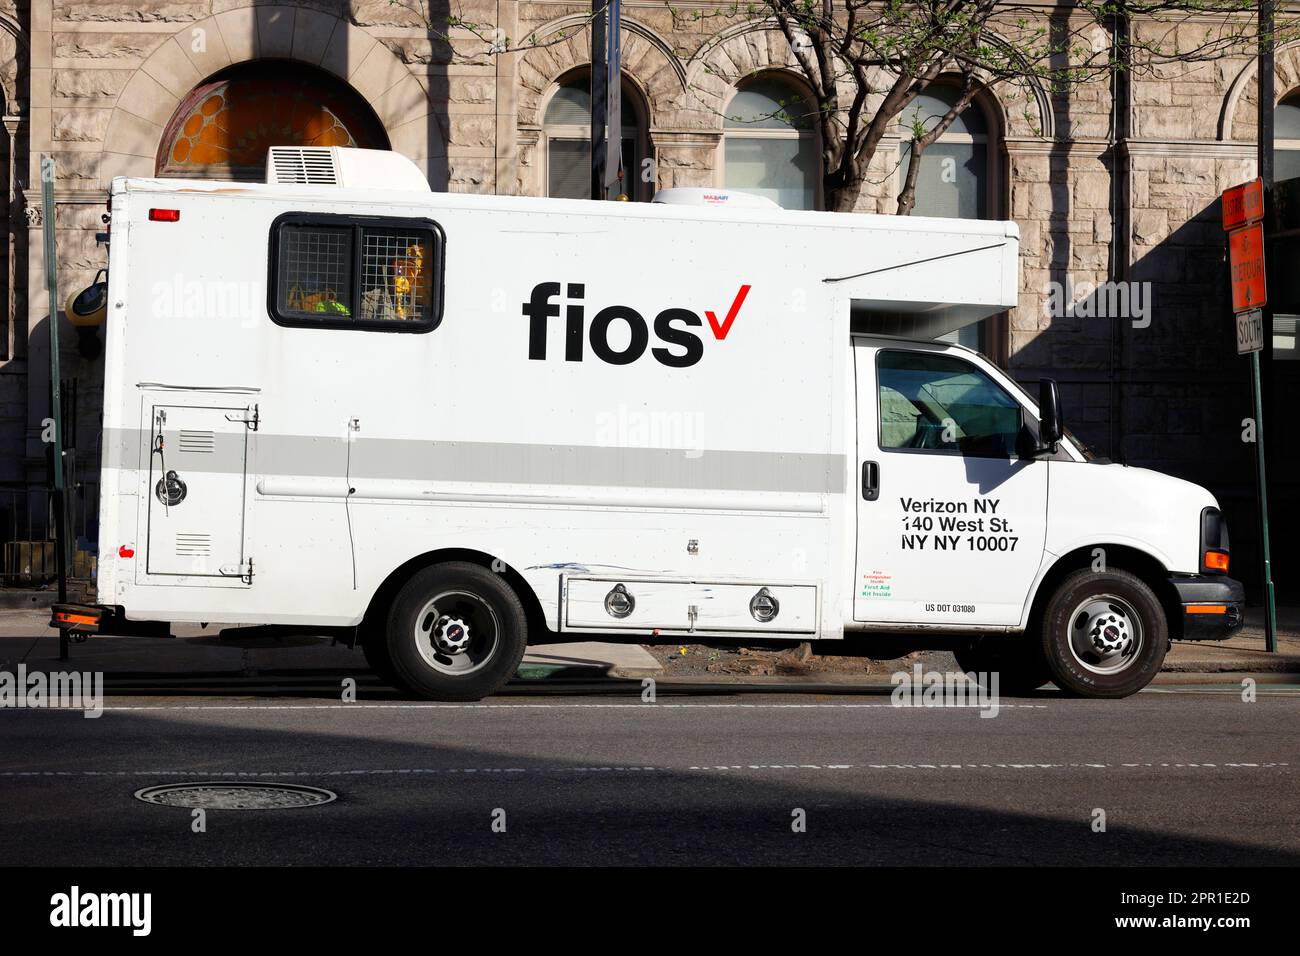 A Verizon Fios truck parked on a Manhattan street in New York City Stock Photo